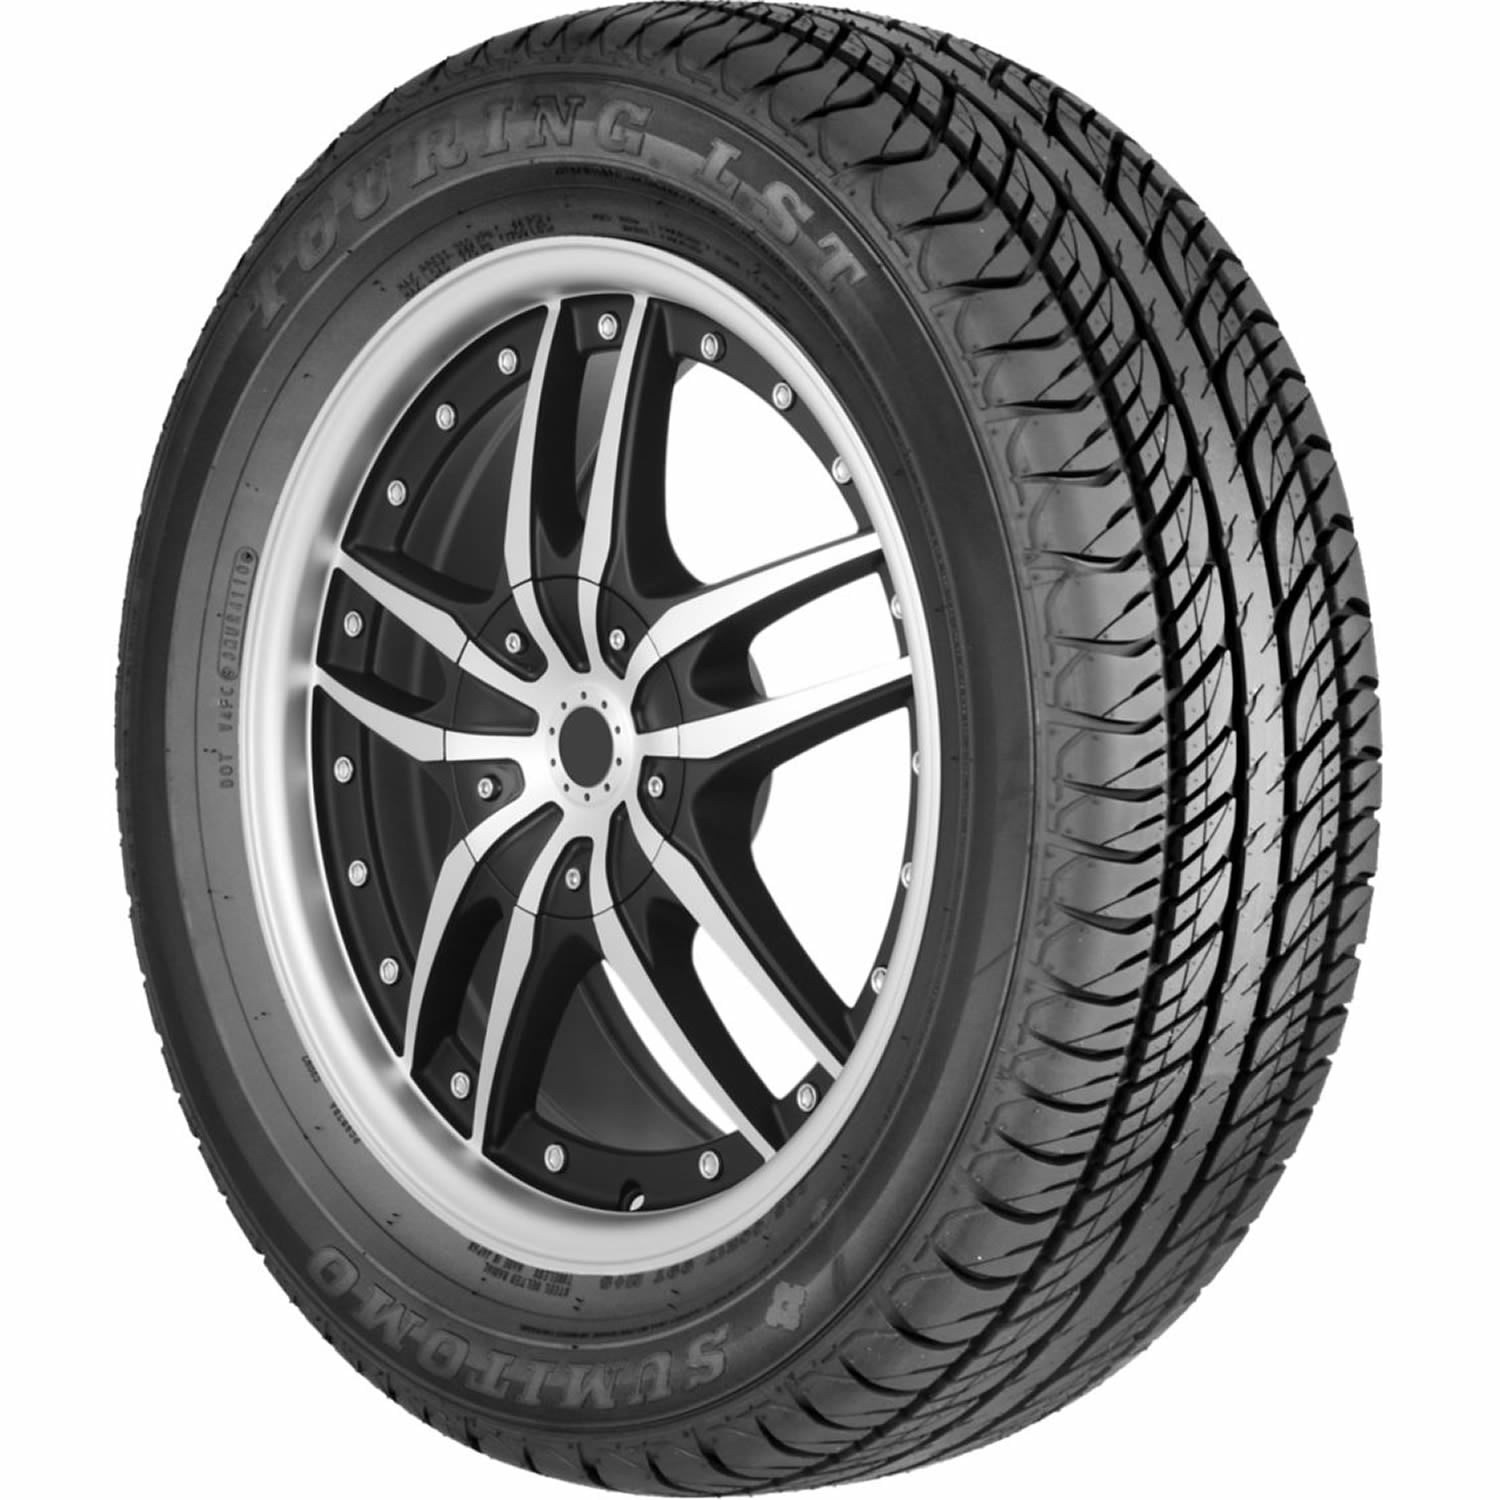 SUMITOMO TOURING LS 205/55R16 (25.1X8.1R 16) Tires